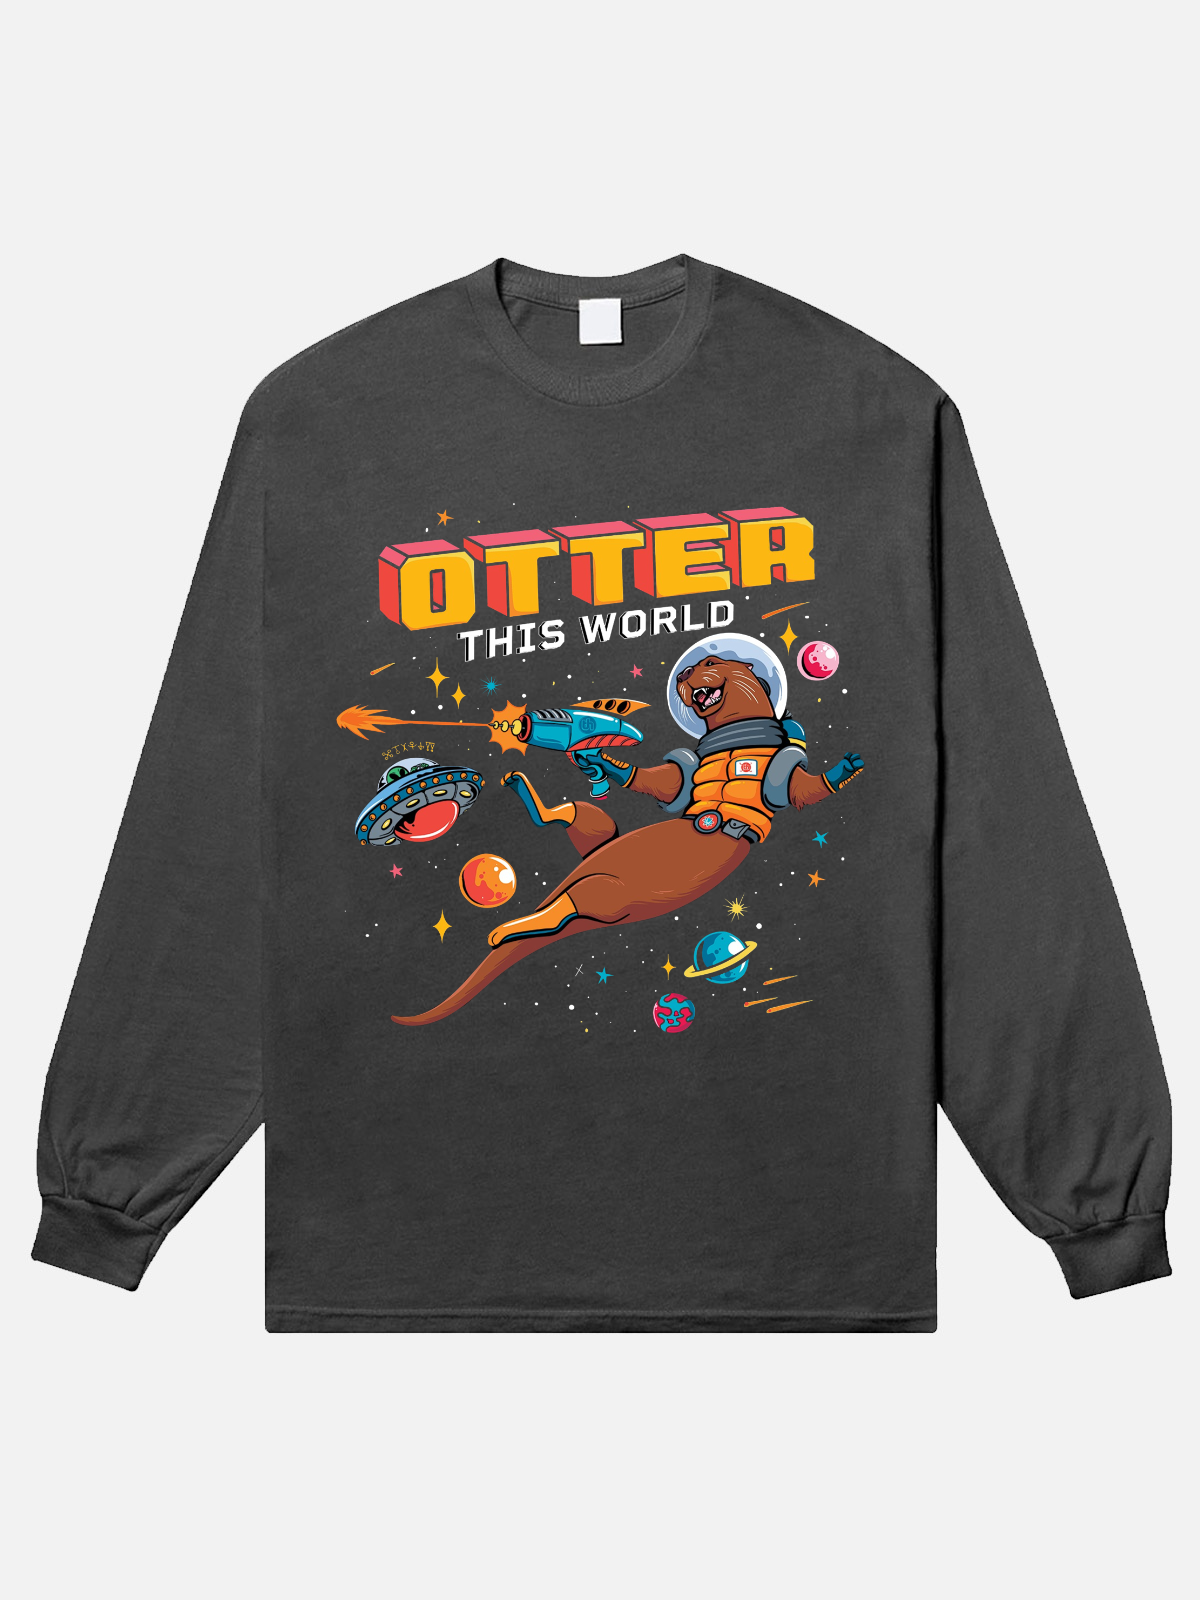 Otter Universe Long Sleeve T-Shirt